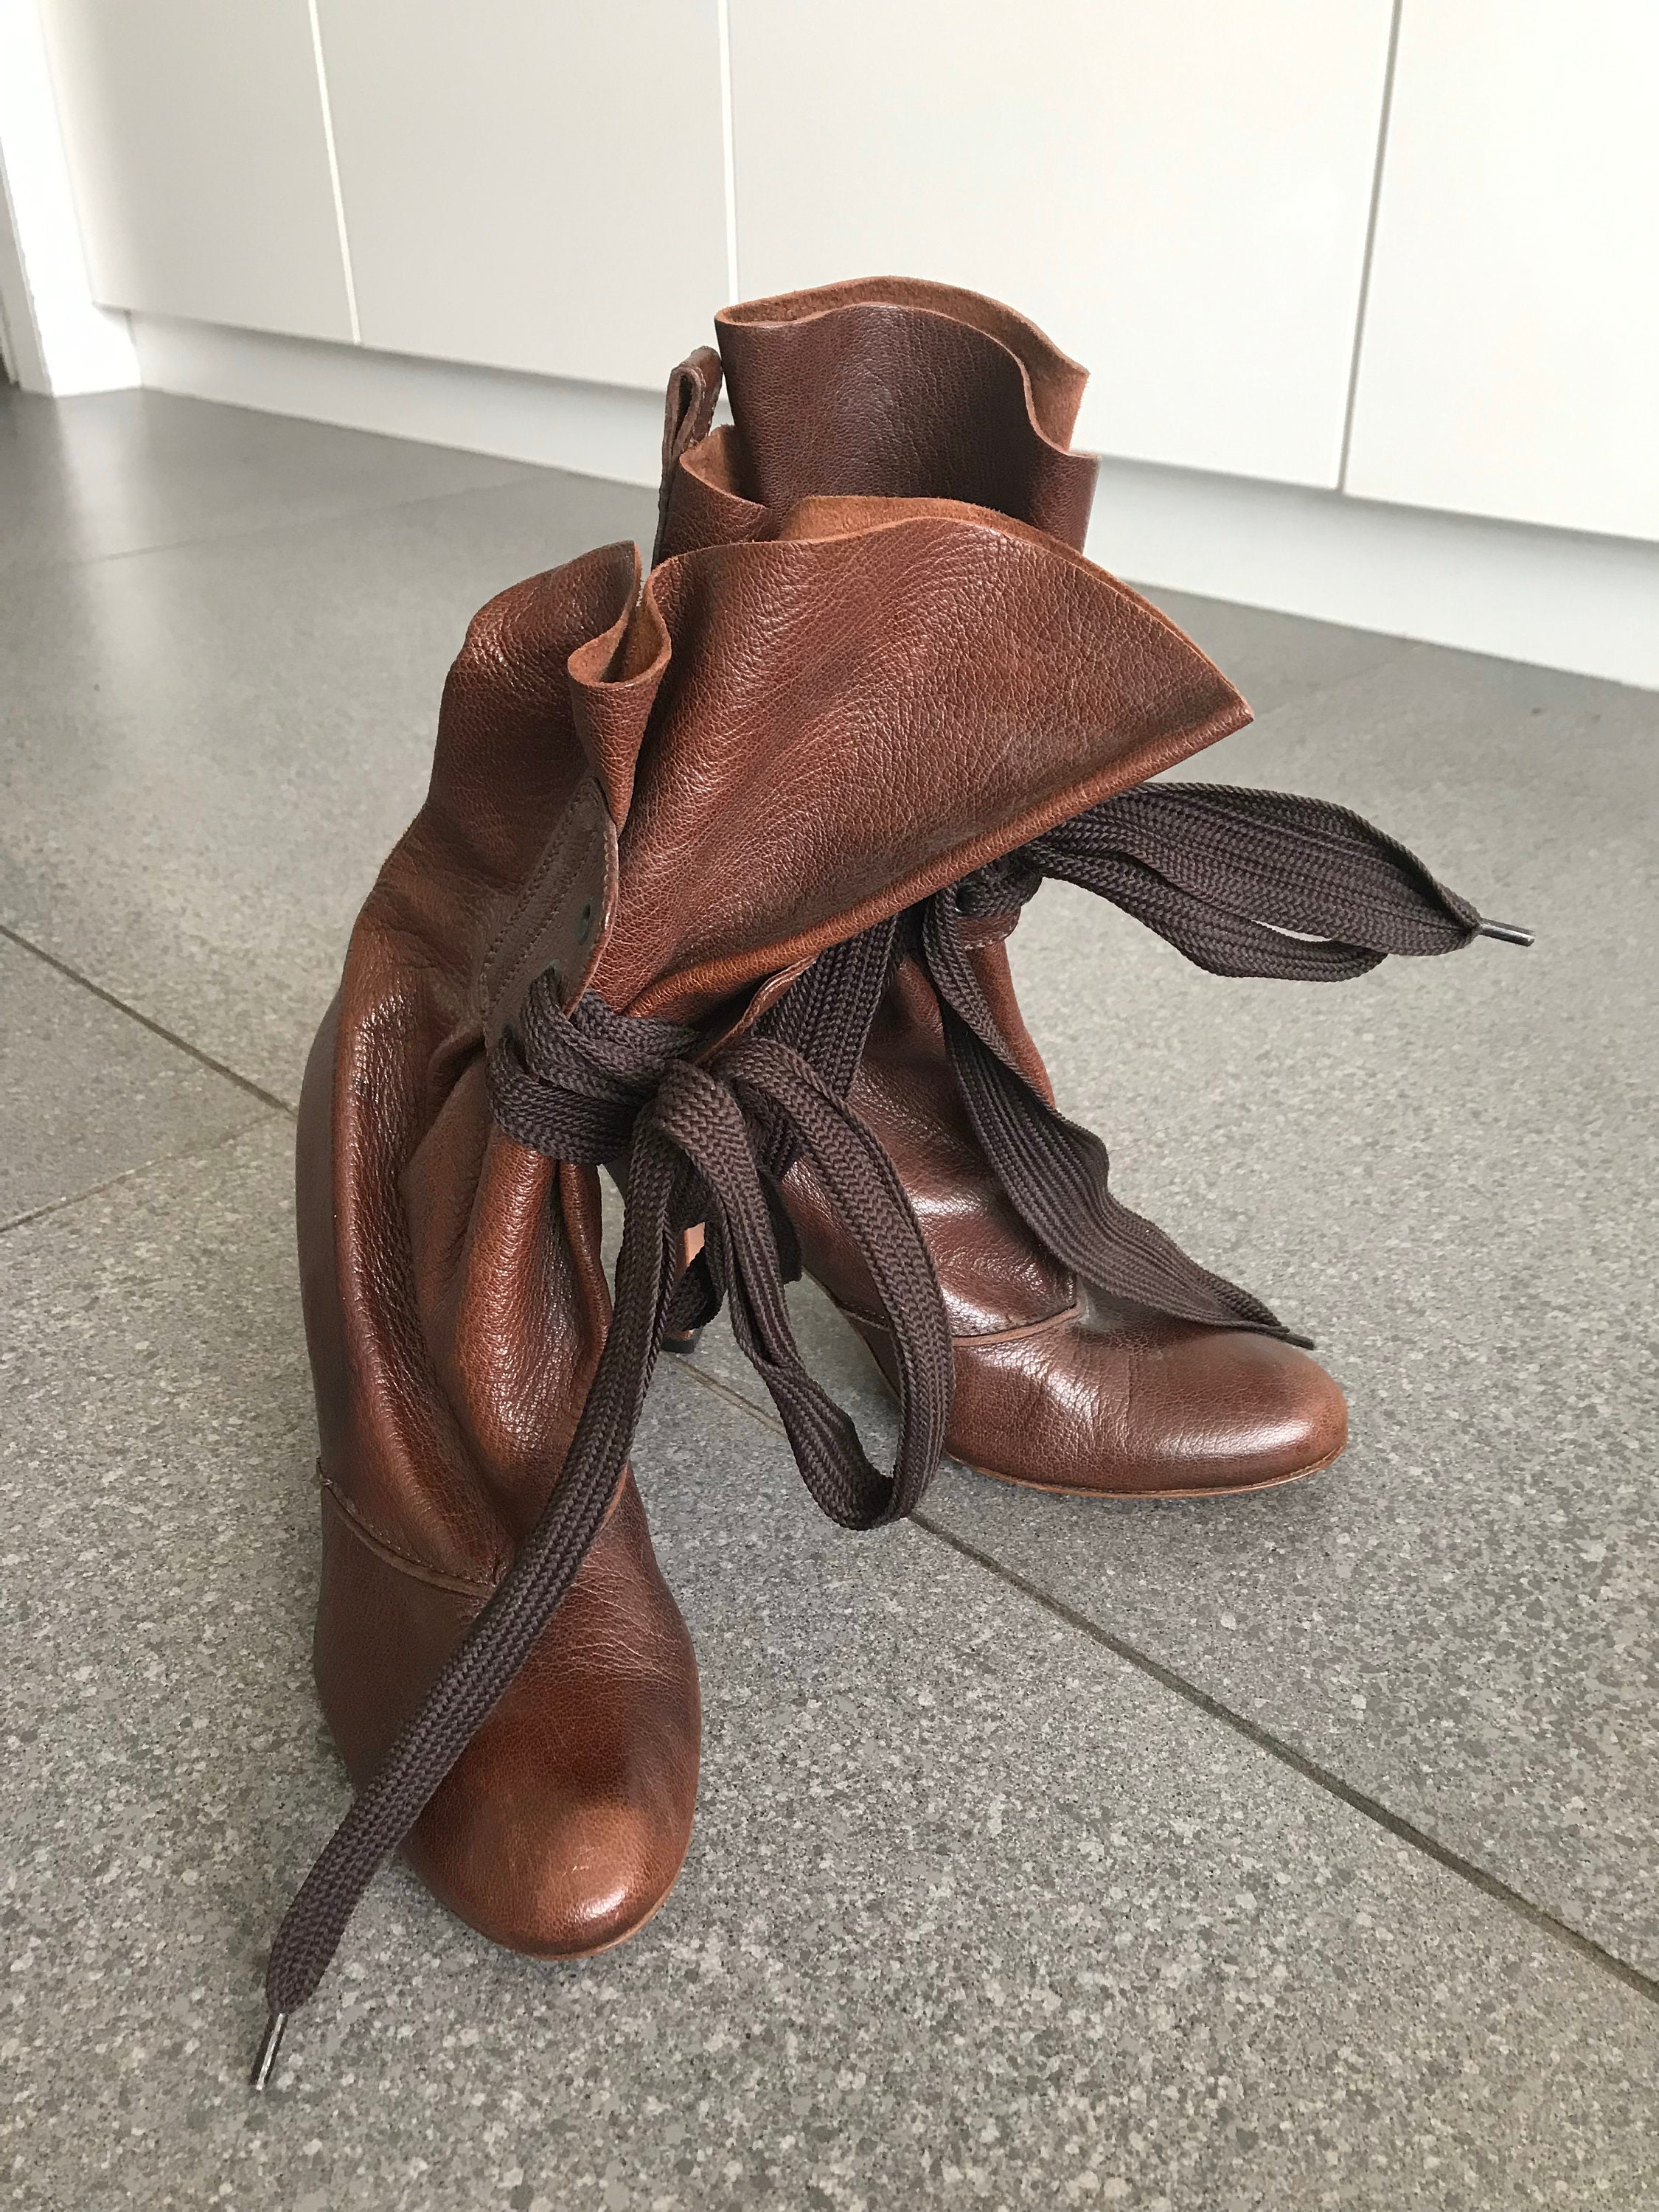 Incredible Vivienne Westwood Gold Label Bag/sack Boots Size 38 